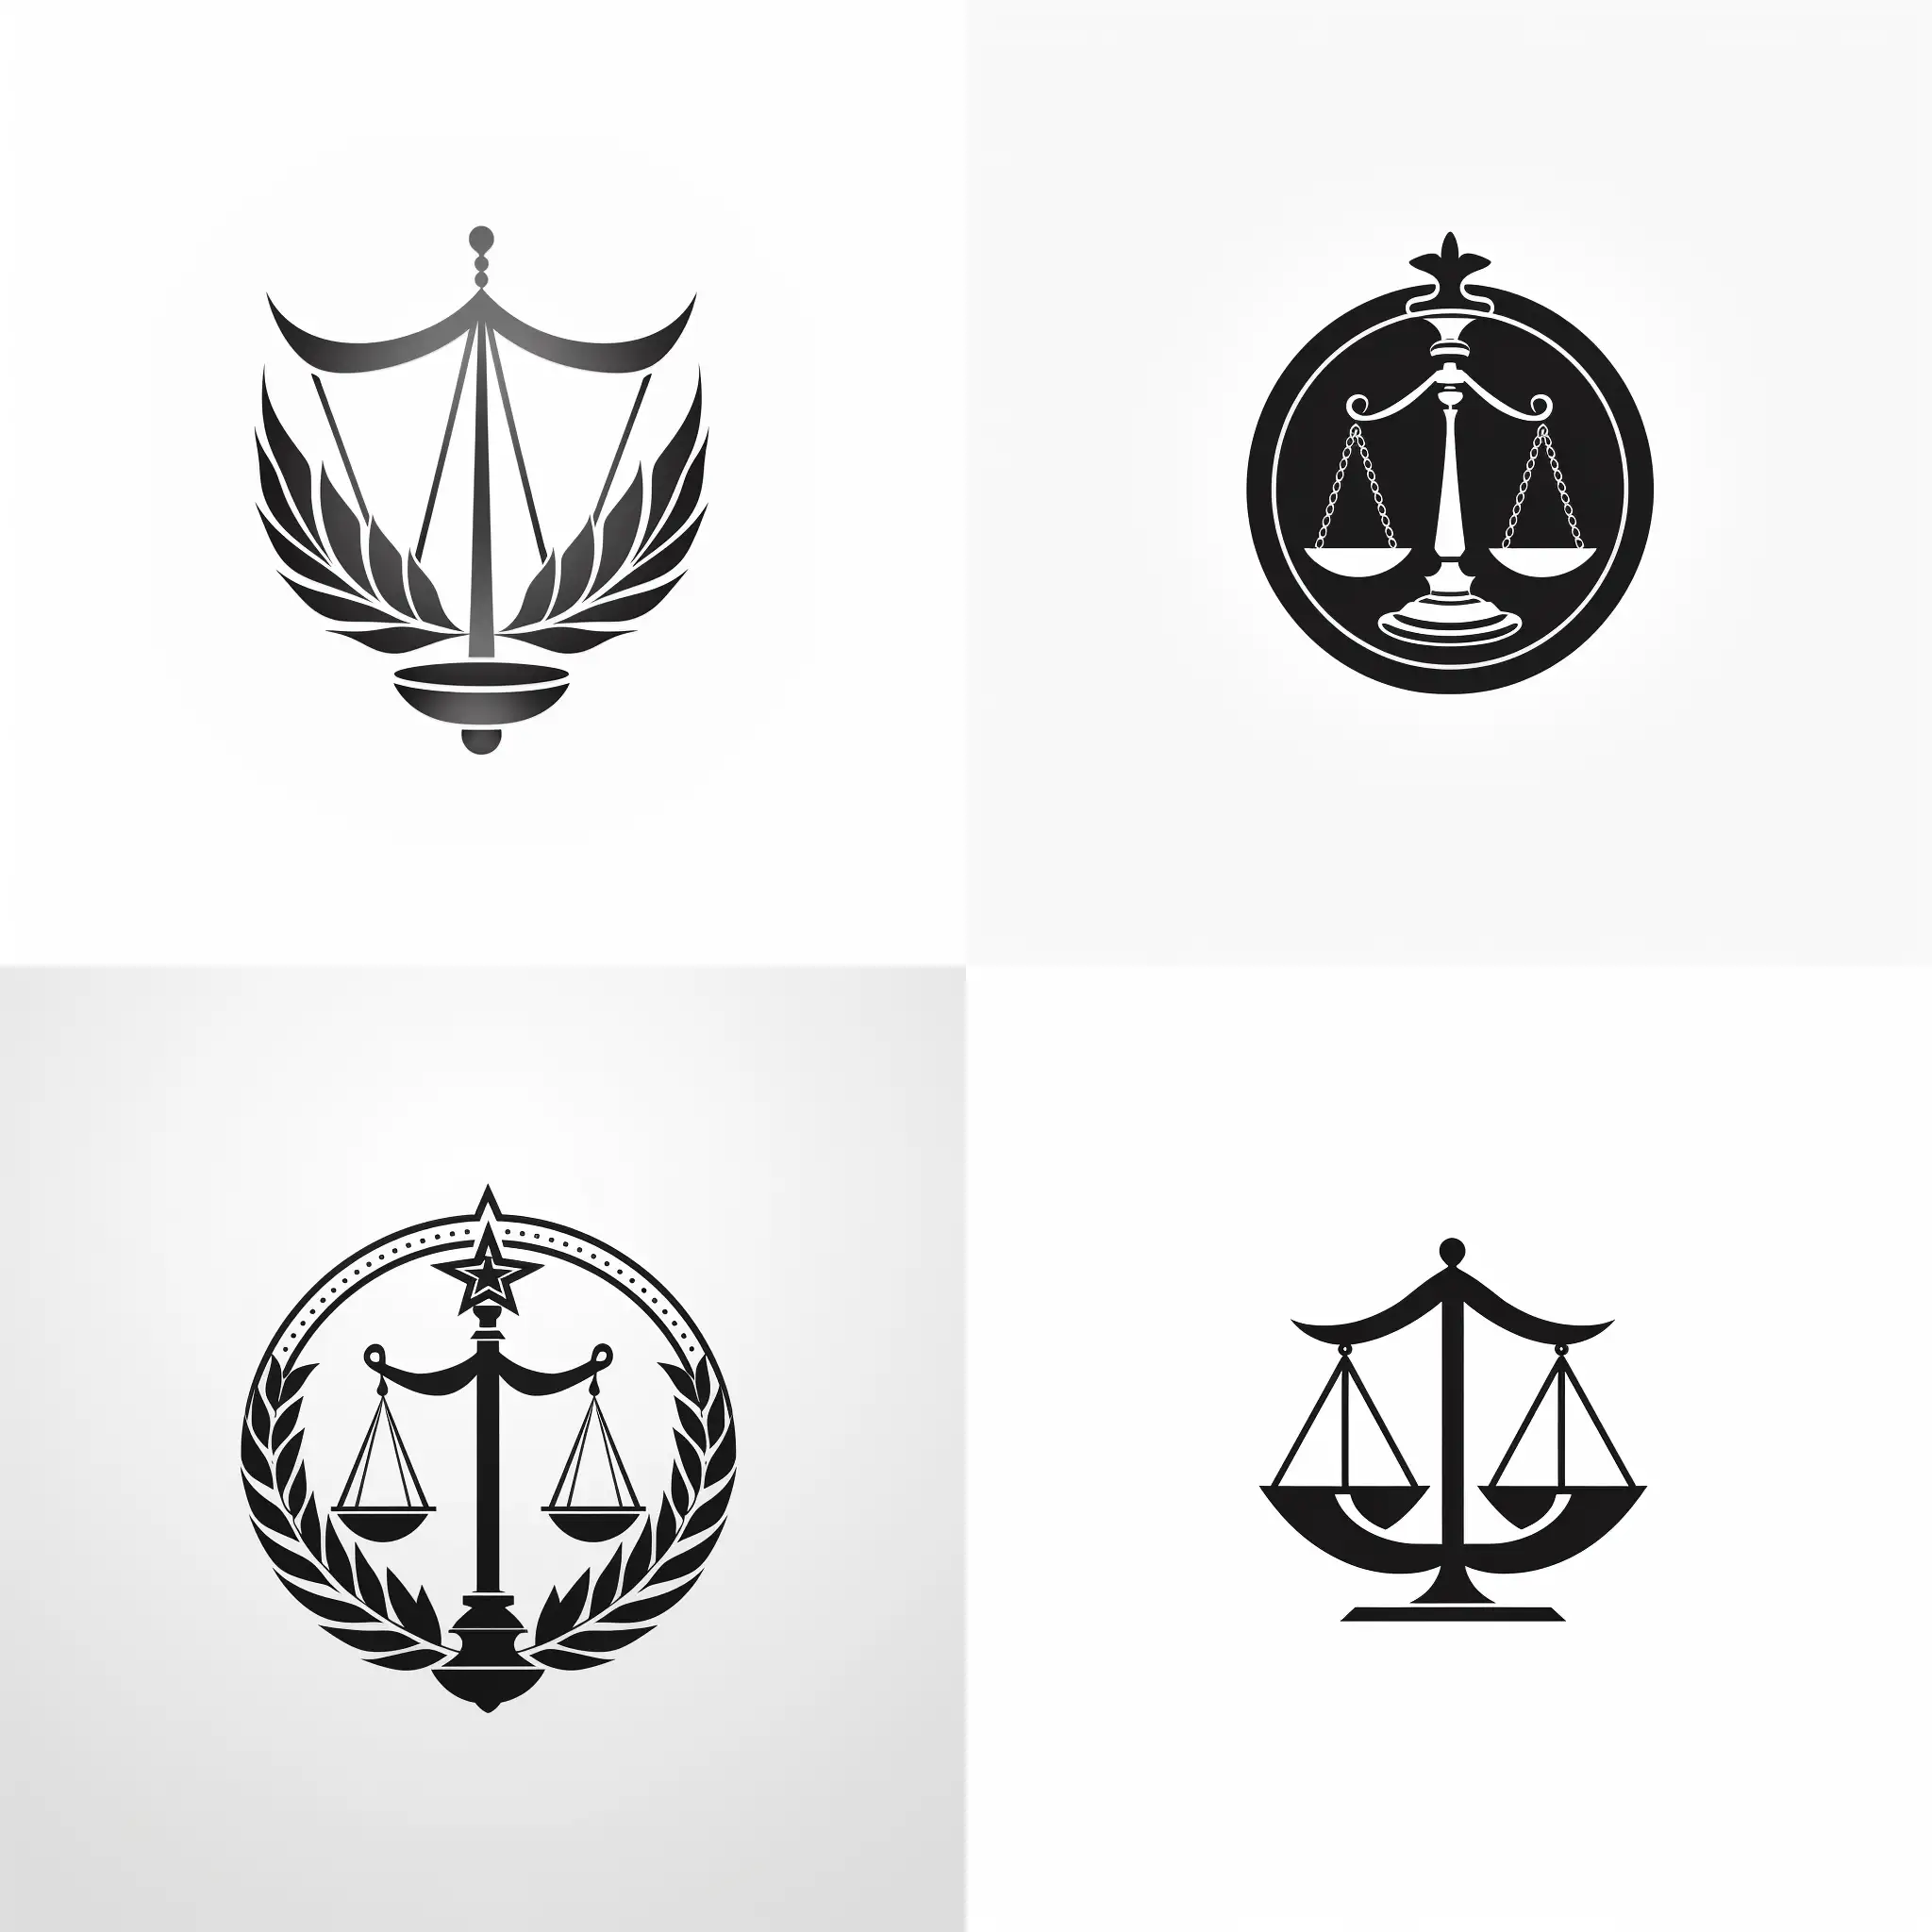 monochrome logo of a law agency